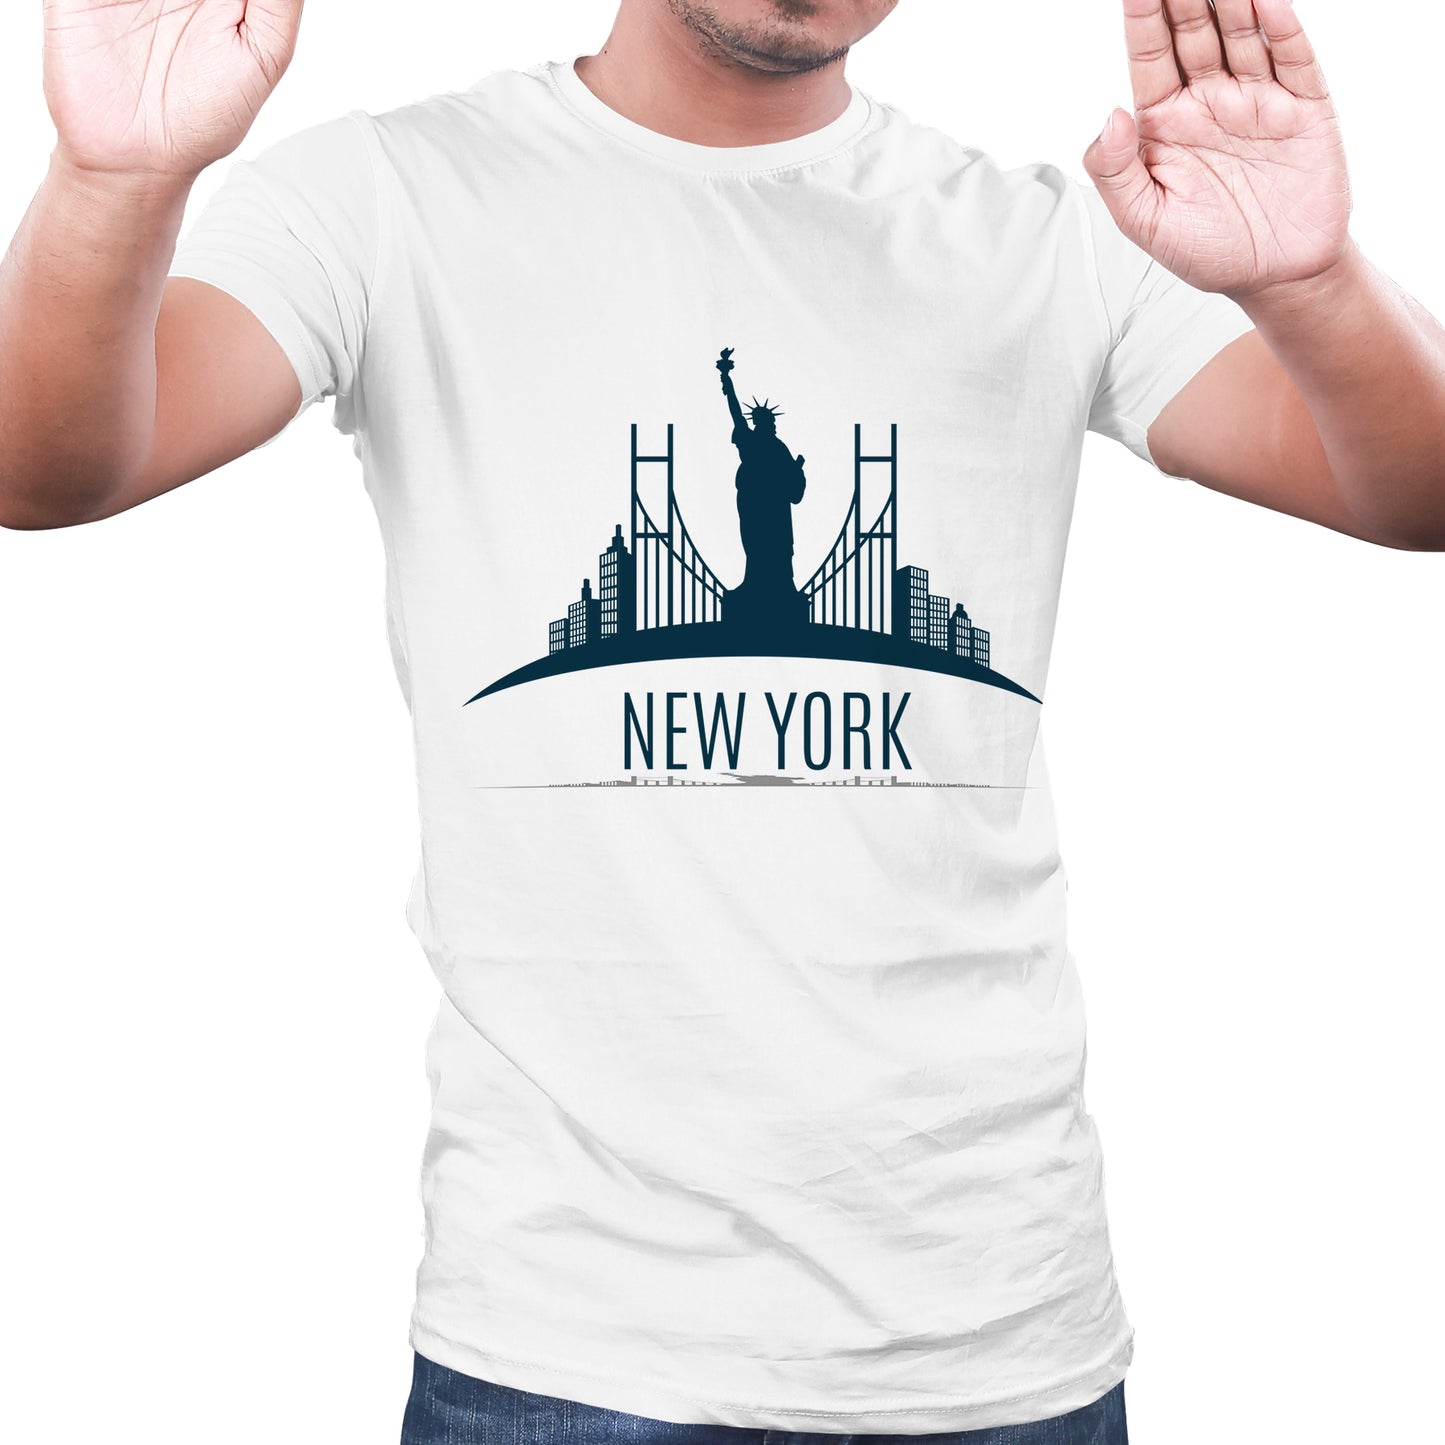 Travel the world & Holiday in newyork unisex t shirts - Black